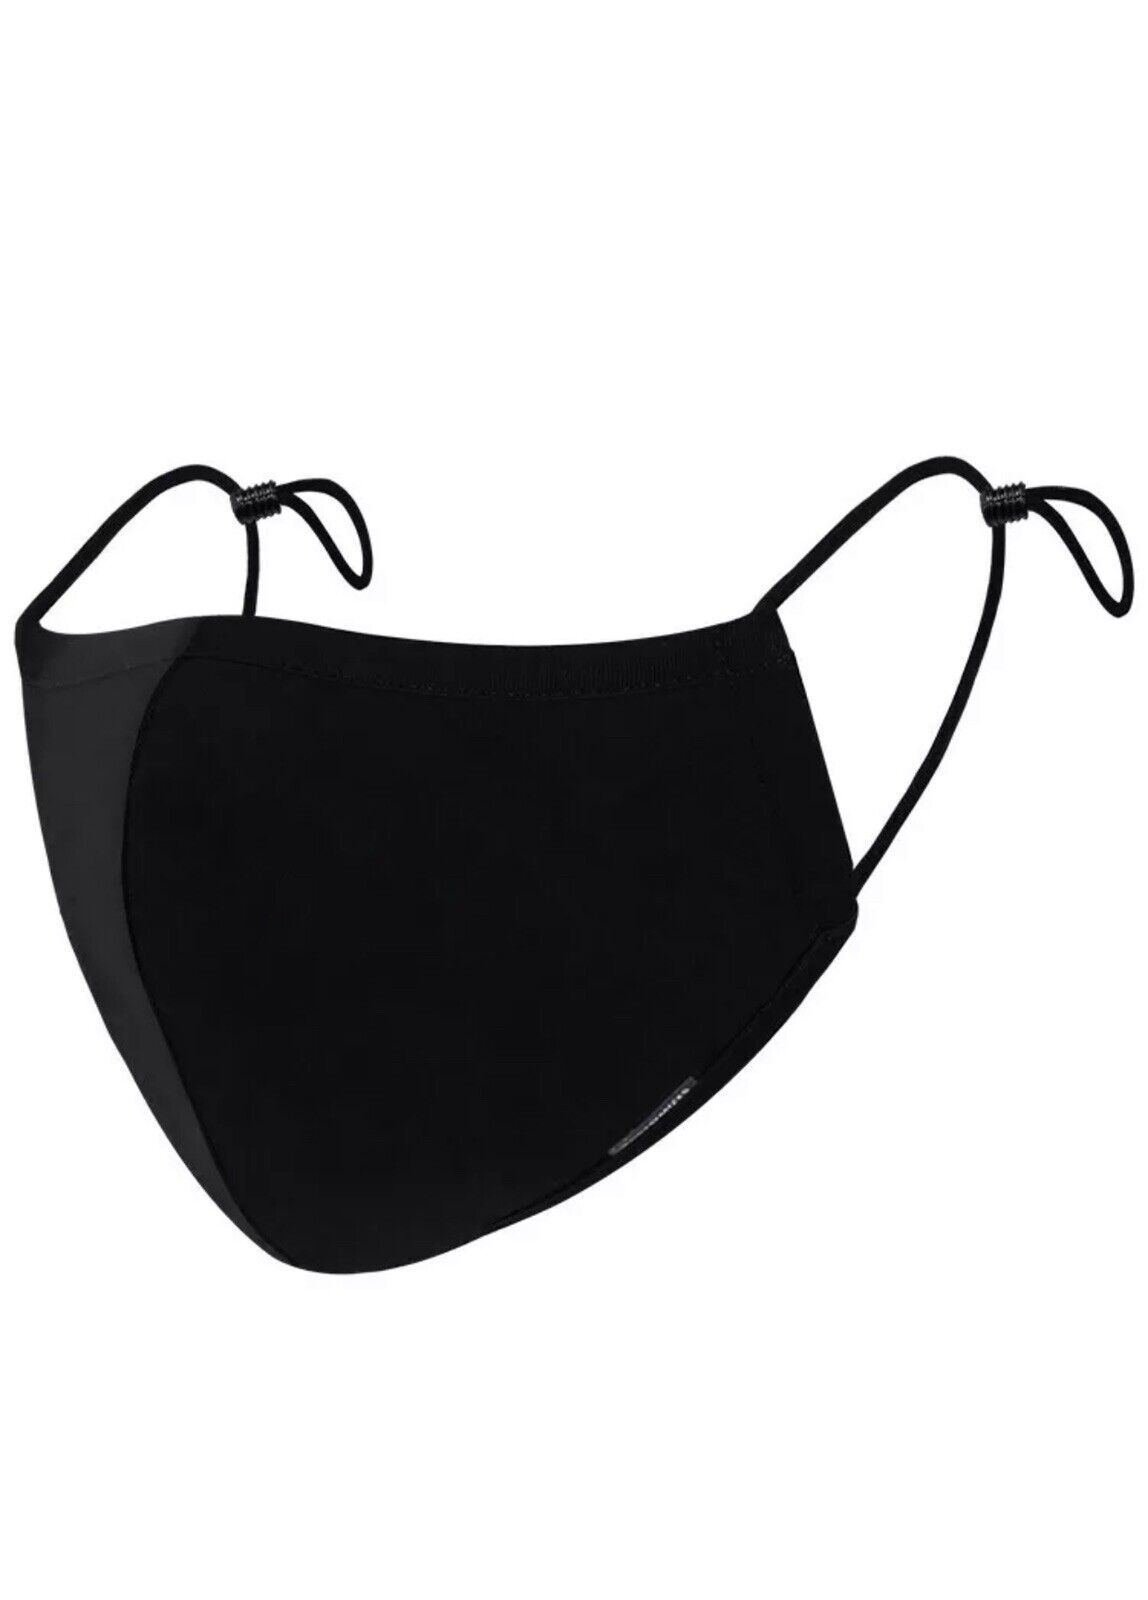 6 Face Masks Black Cotton Adult Mask Adjustable Elastic Loops Washable Reusable Unbranded - фотография #5